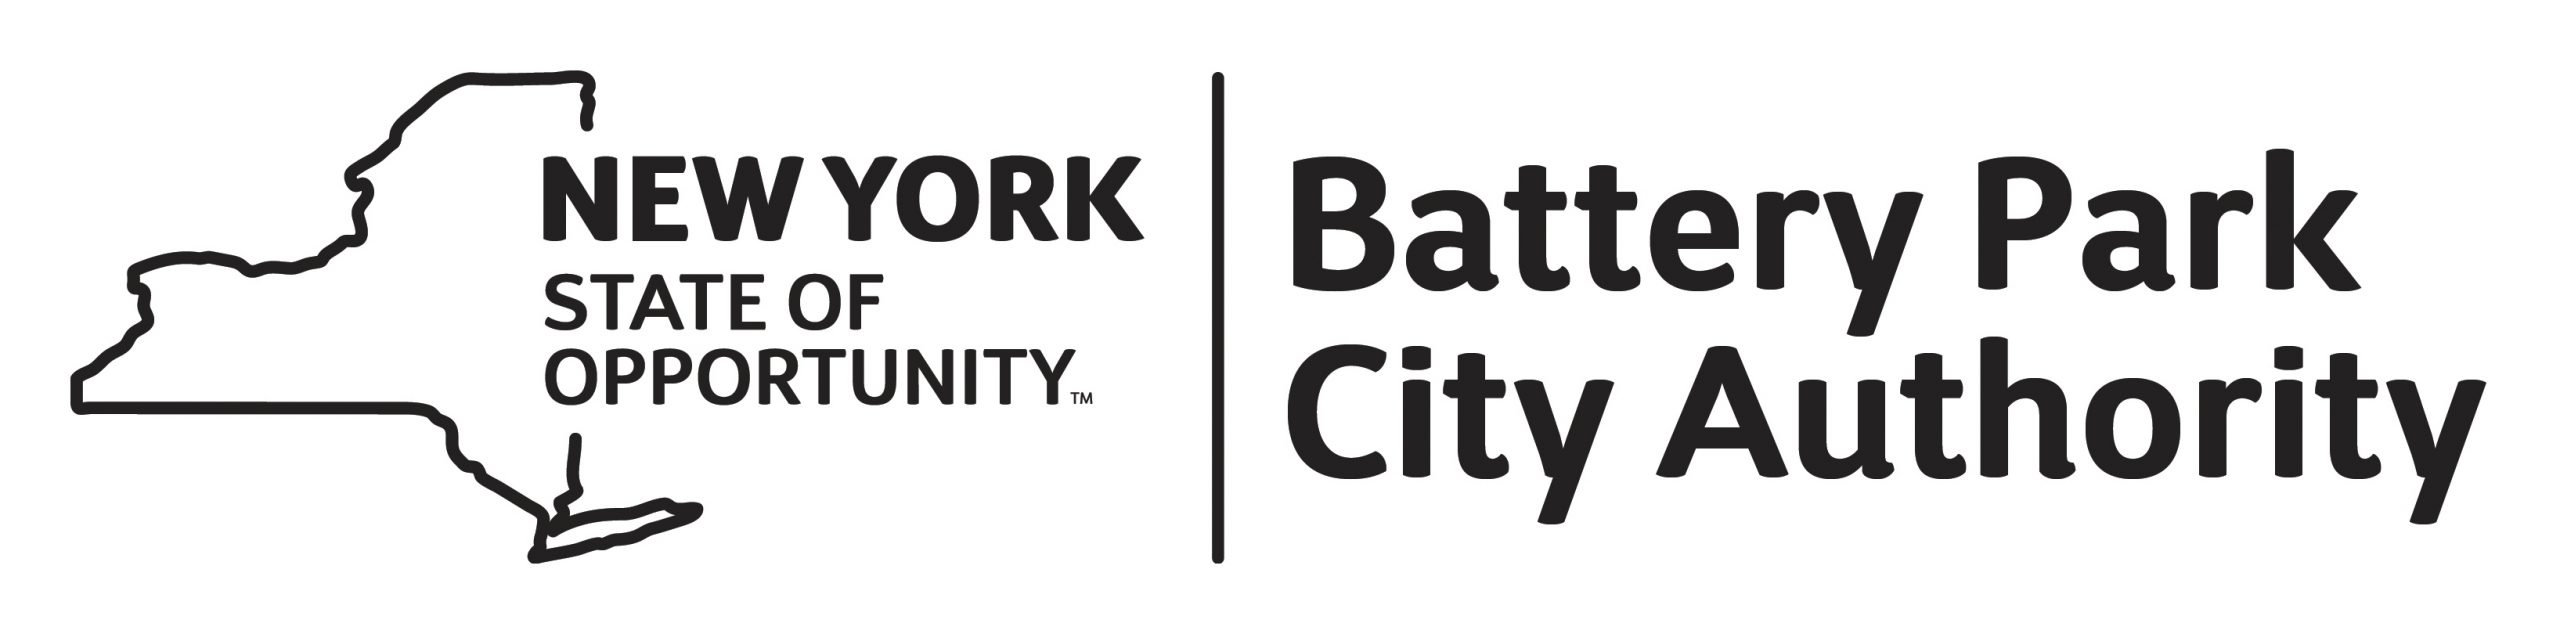 Battery-Park-Authority-BW-scaled